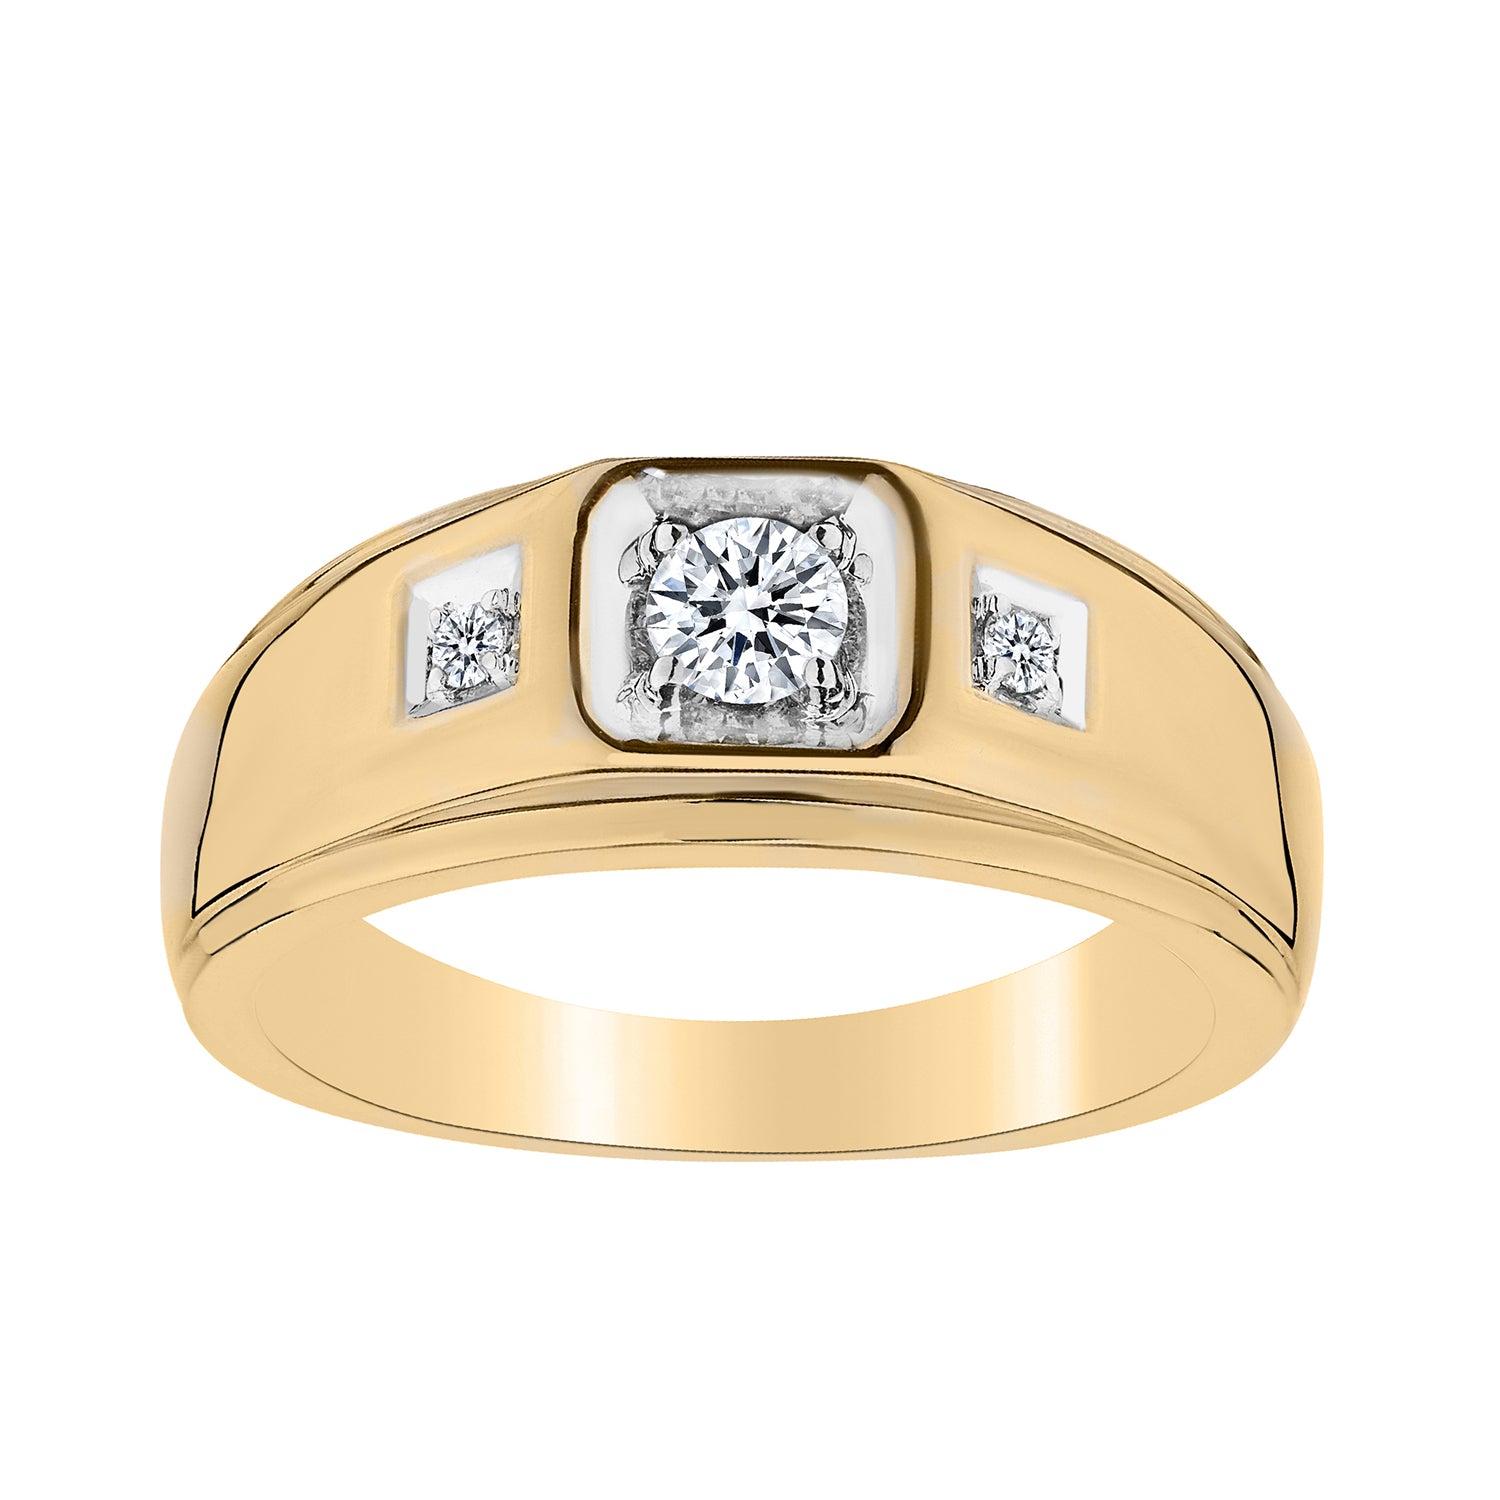 .33 CARAT DIAMOND "PAST, PRESENT, FUTURE" GENTLEMAN'S RING, 10kt YELLOW GOLD…......................NOW - Griffin Jewellery Designs